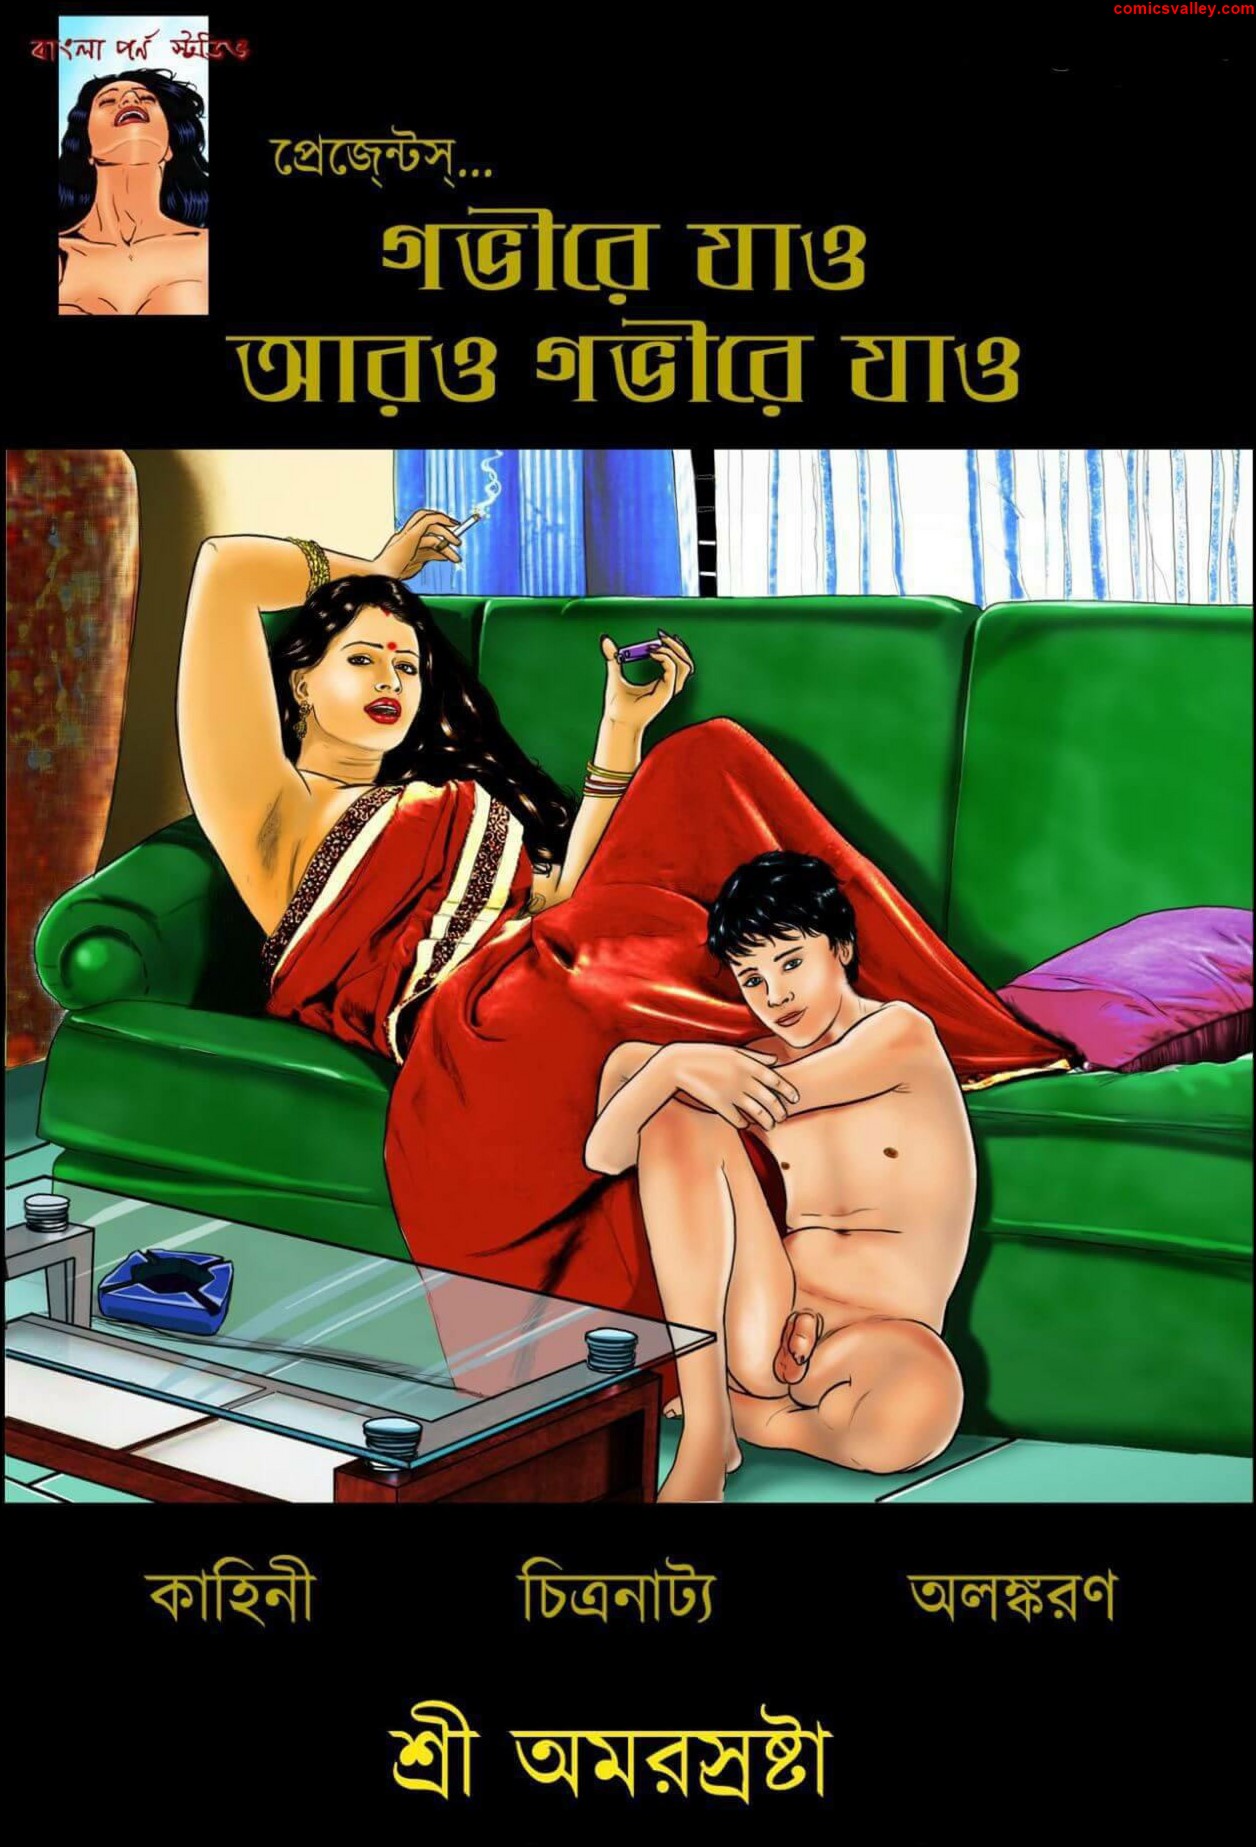 Porn story in bangla